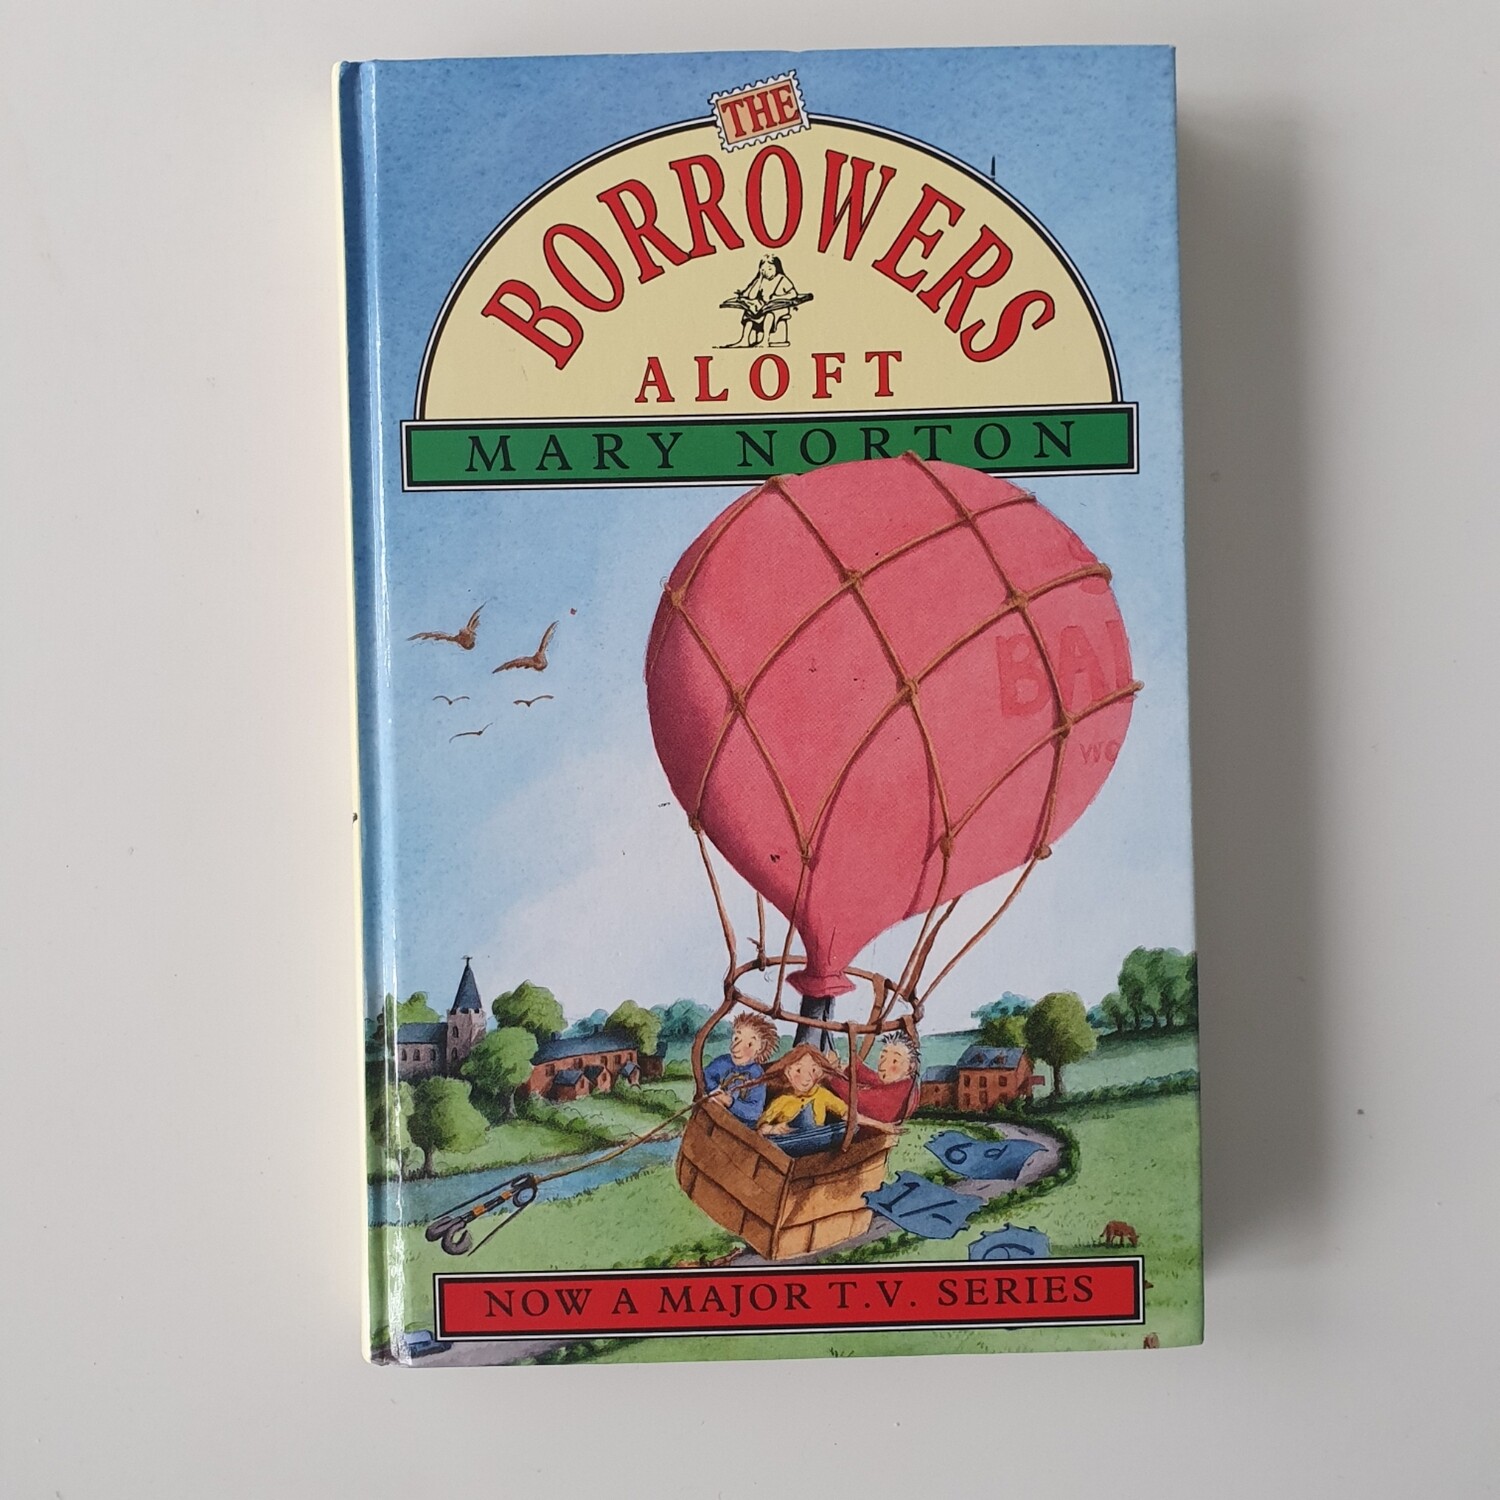 The Borrowers - A Loft by Mary Norton - hot air balloon